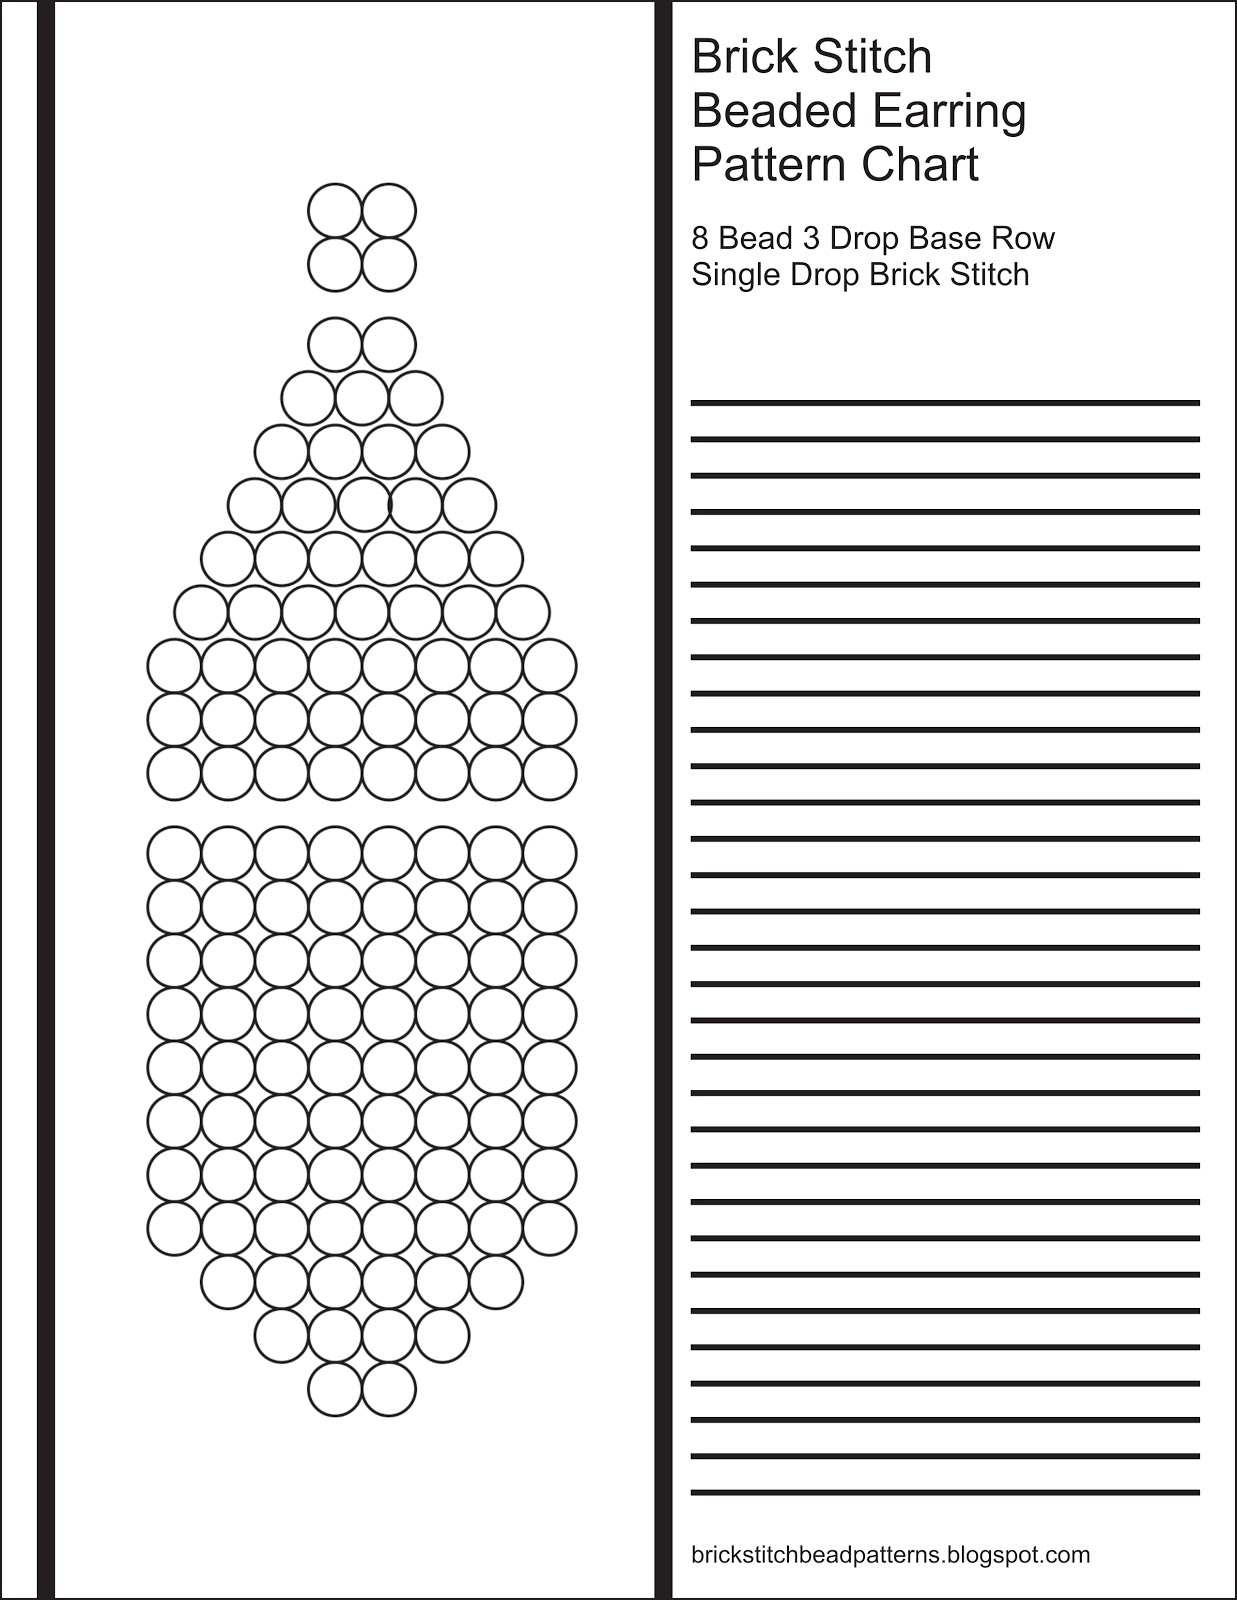 brick-stitch-bead-patterns-journal-8-bead-3-drop-base-row-blank-beaded